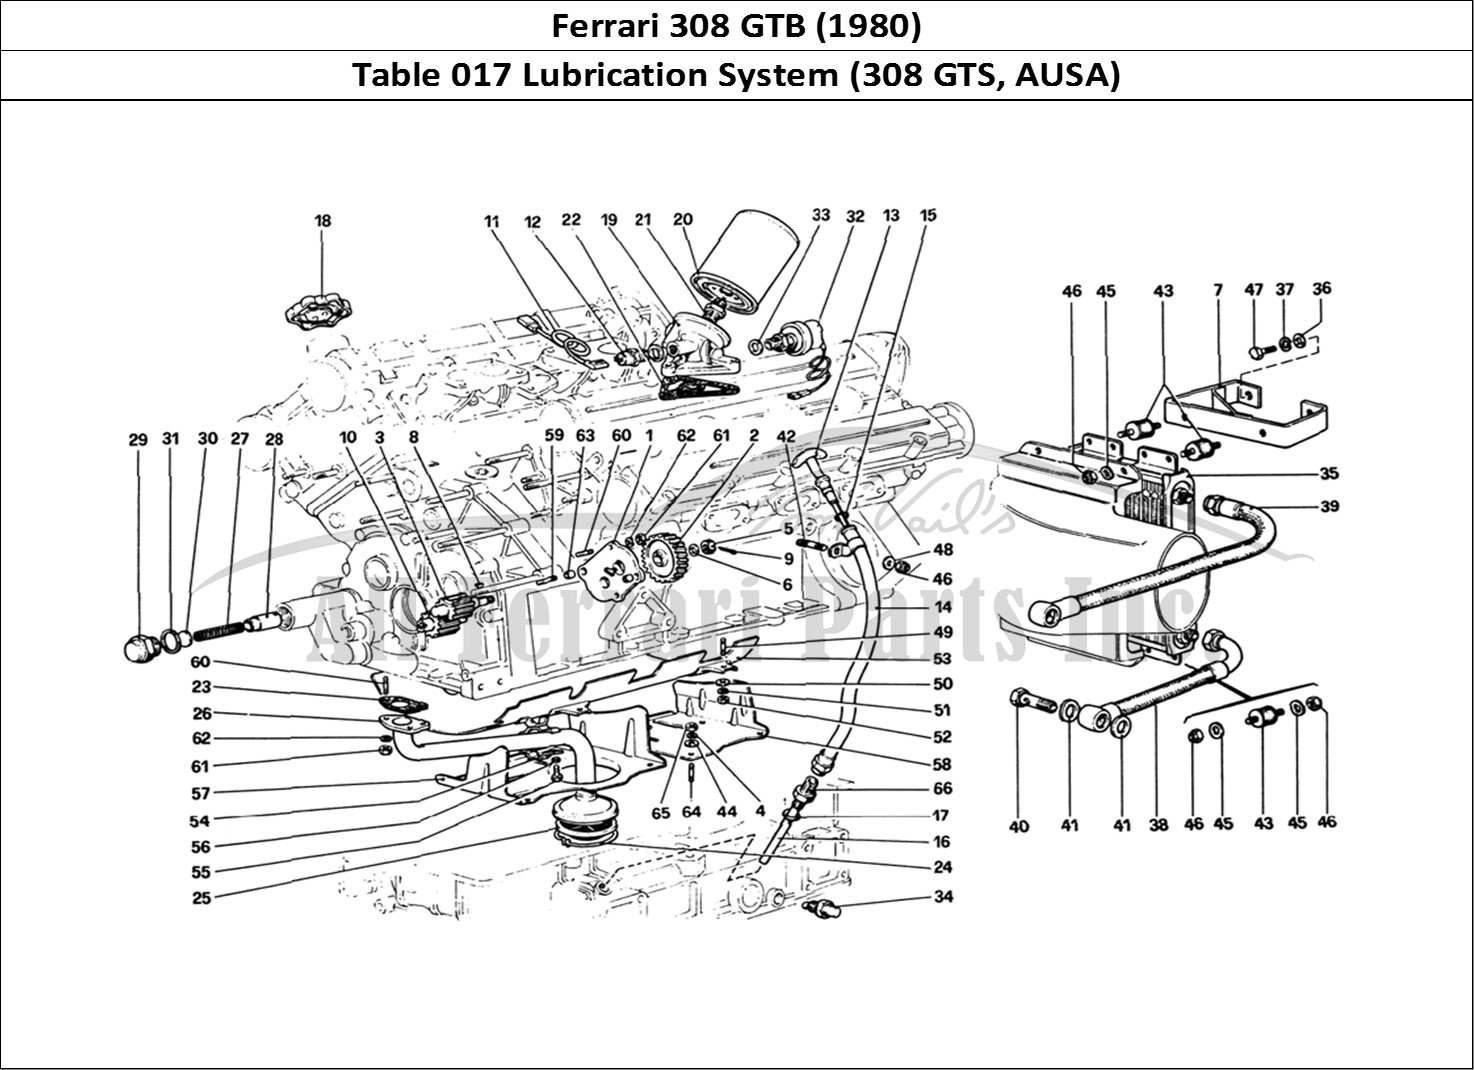 Ferrari Parts Ferrari 308 GTB (1980) Page 017 Lubrification System (308